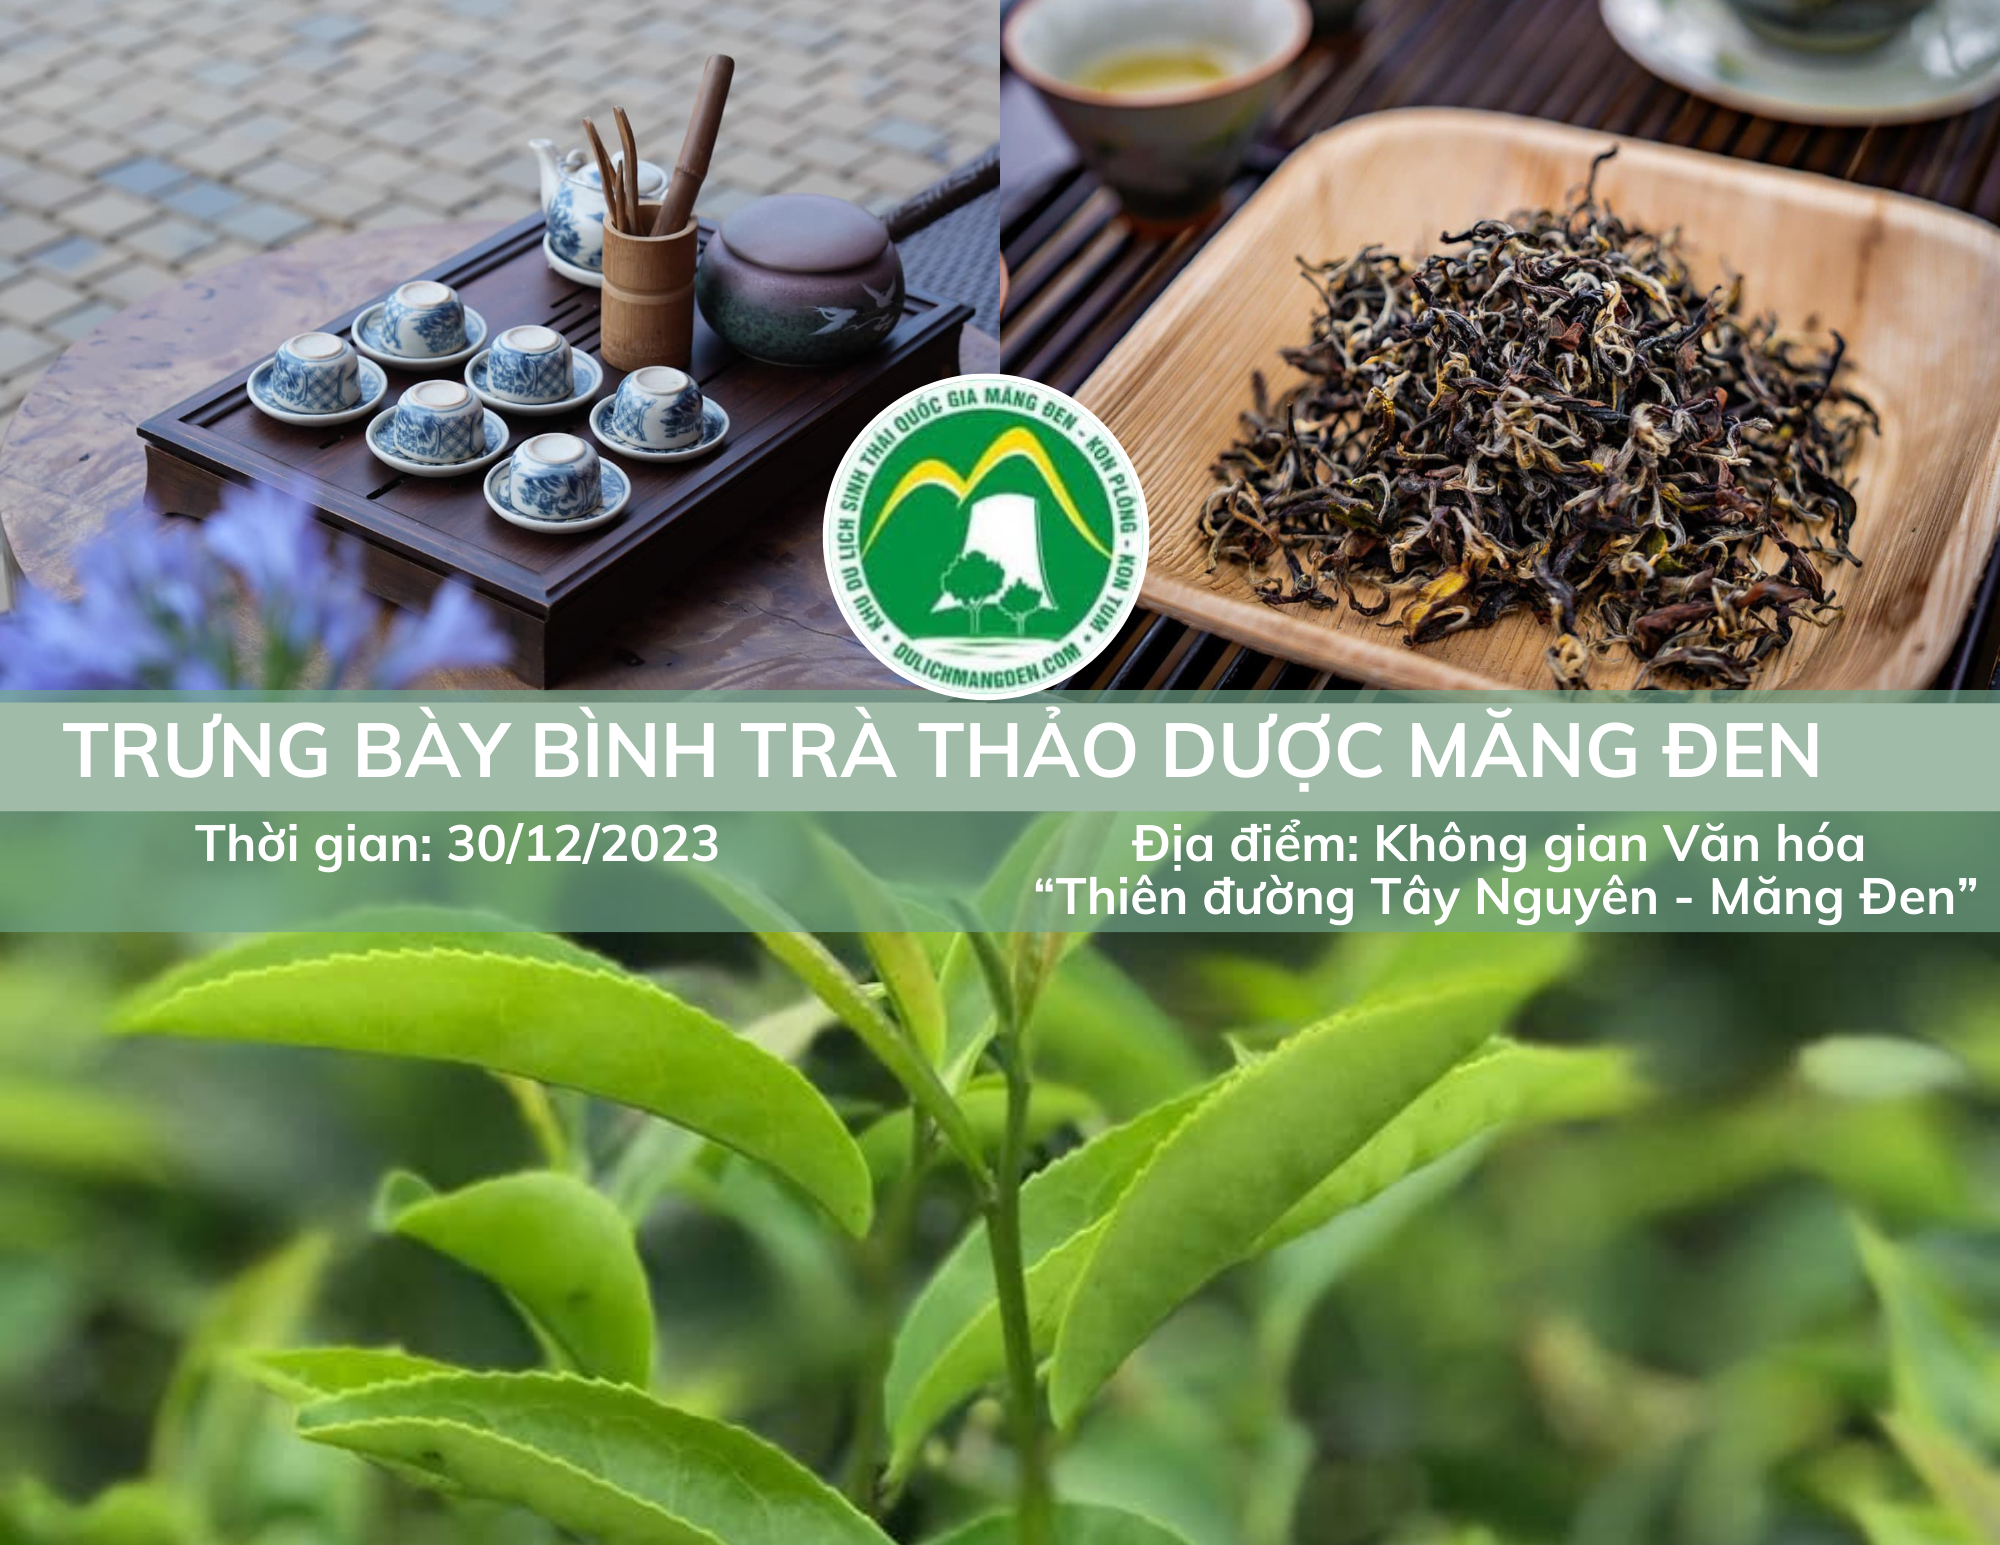 Displaying a pot of Mang Den herbal tea